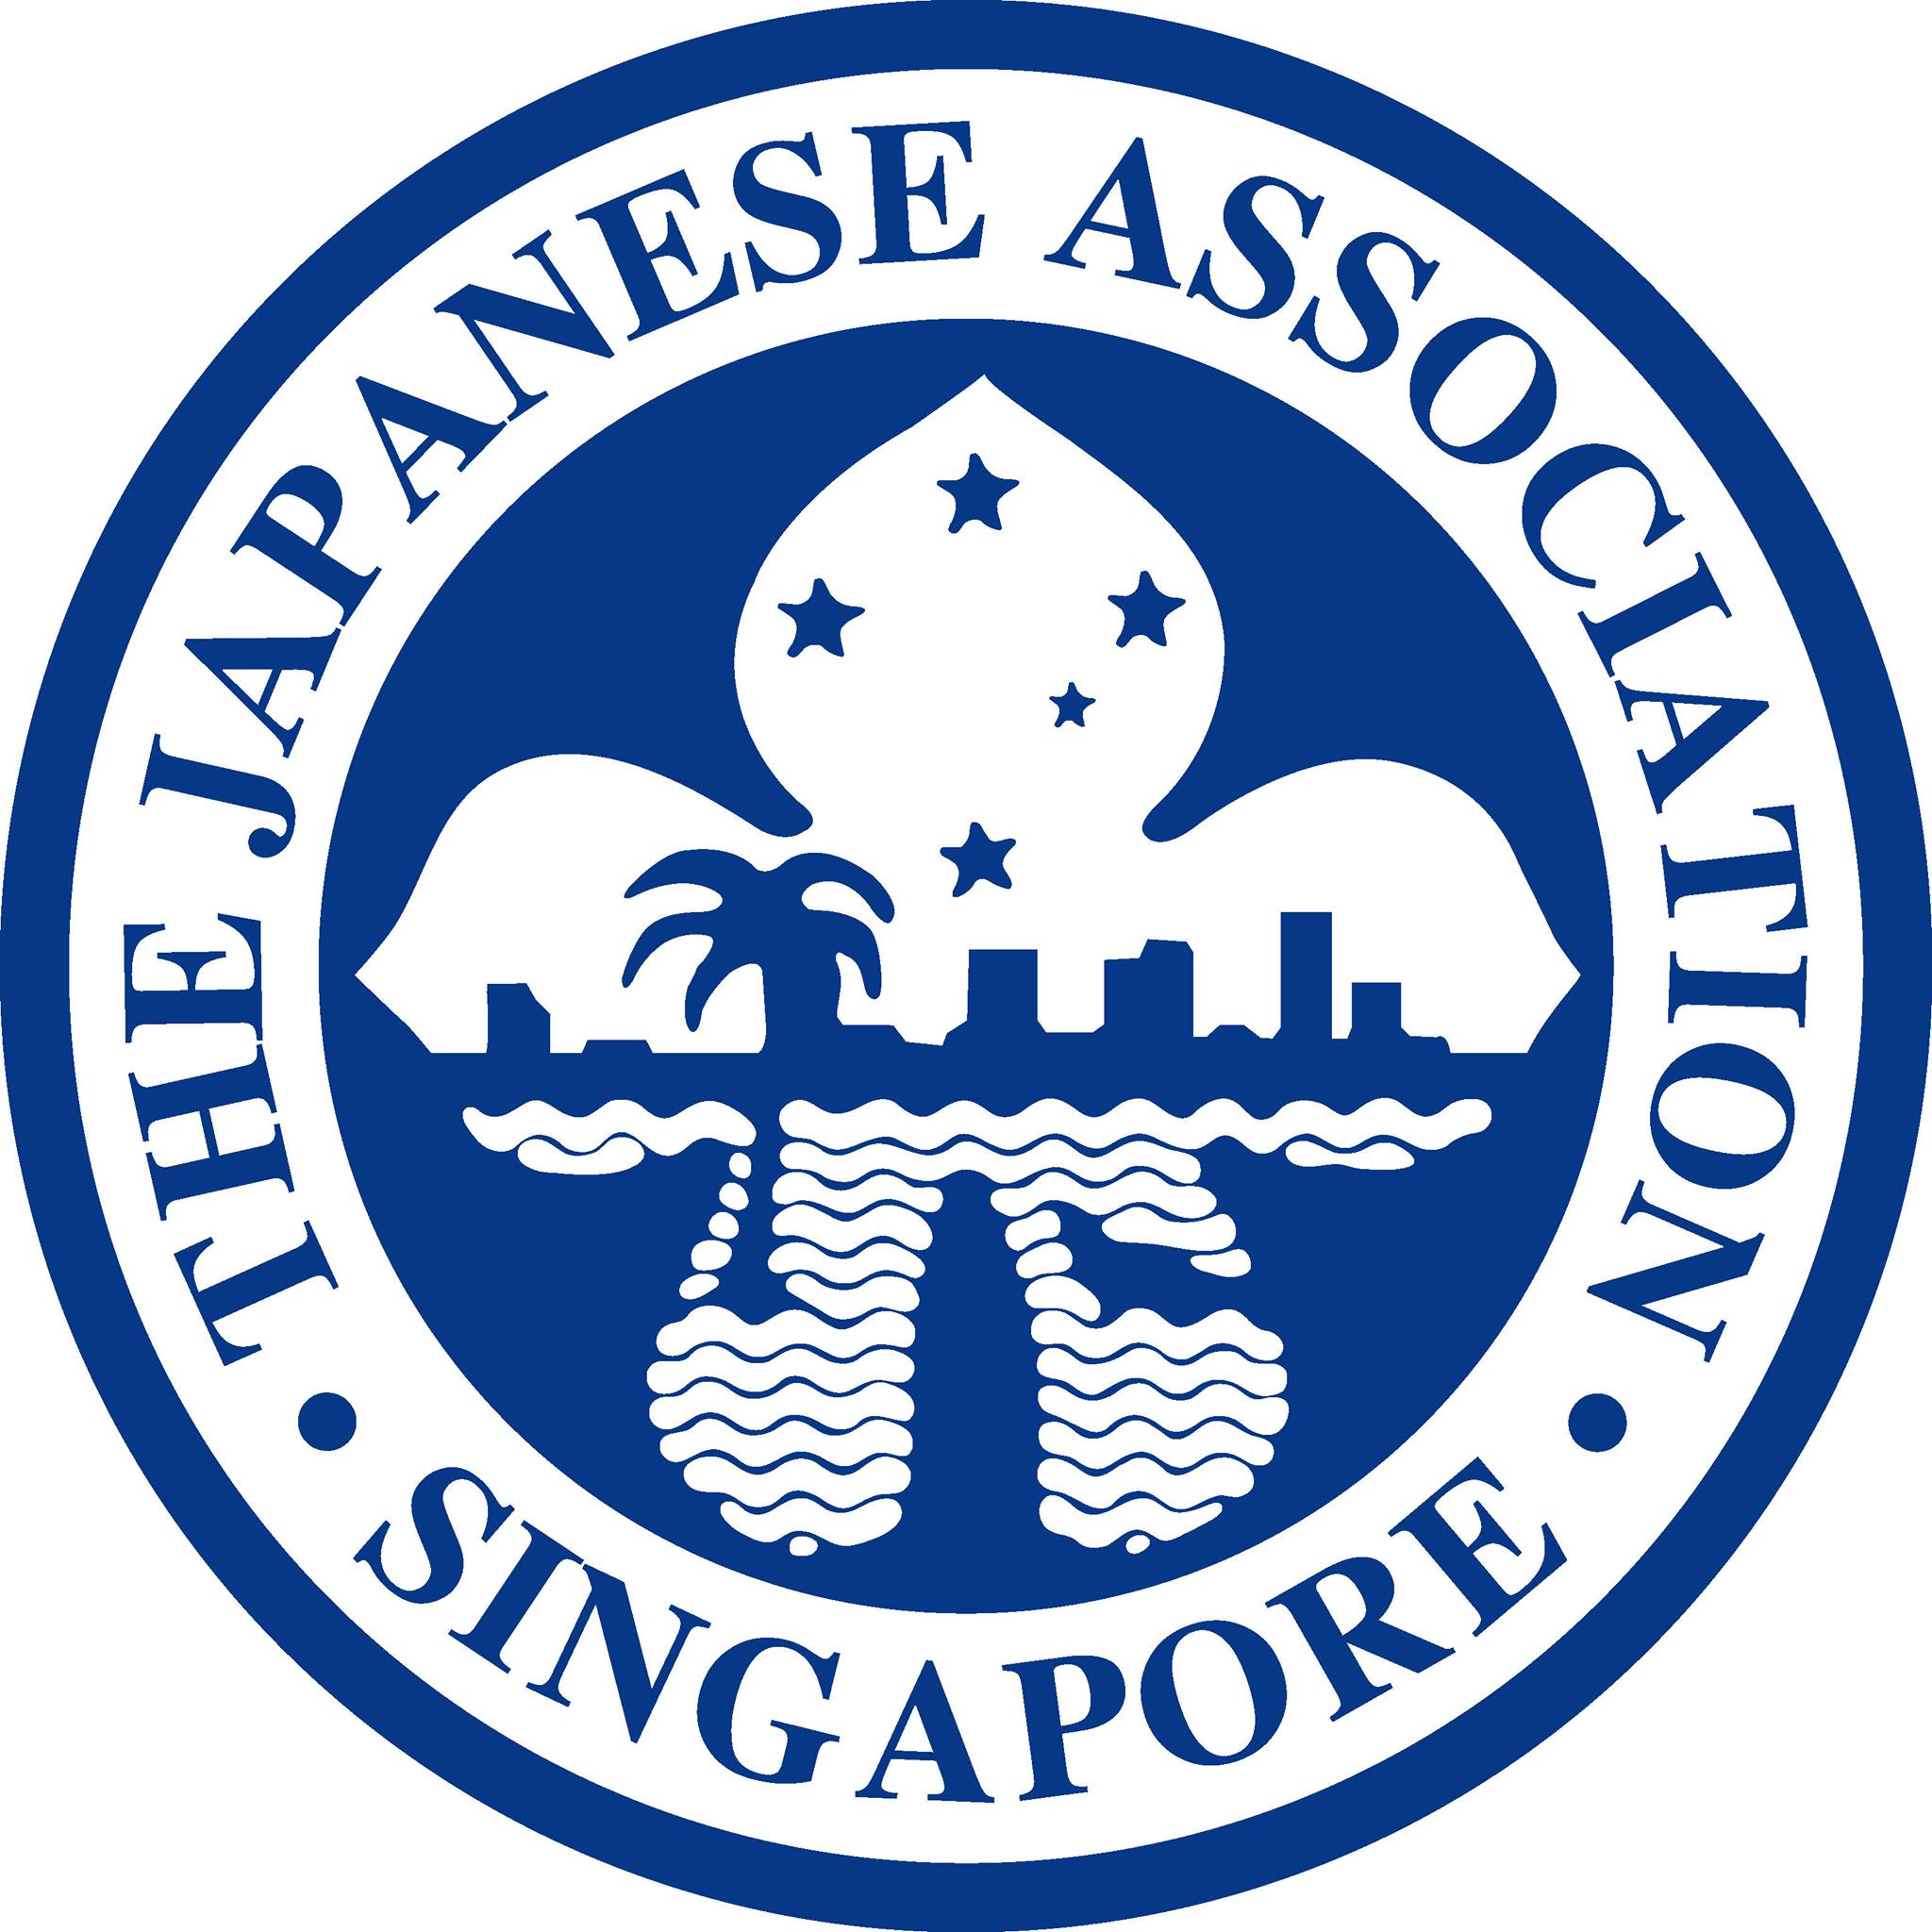 The Japanese Association Singapore